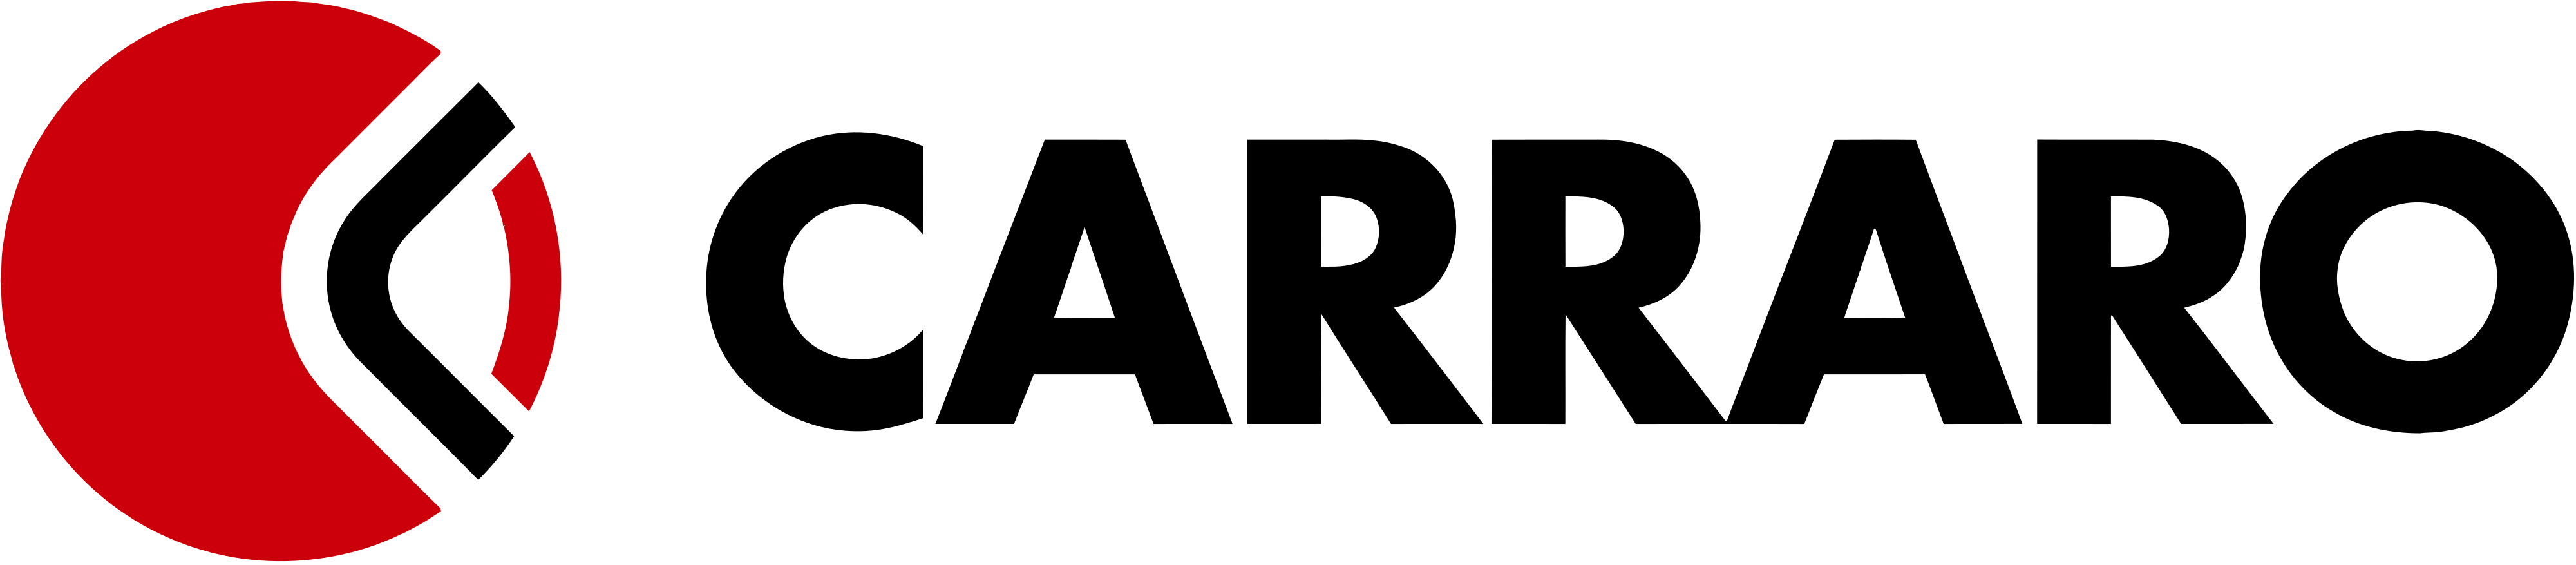 Carraro Group logo - download.